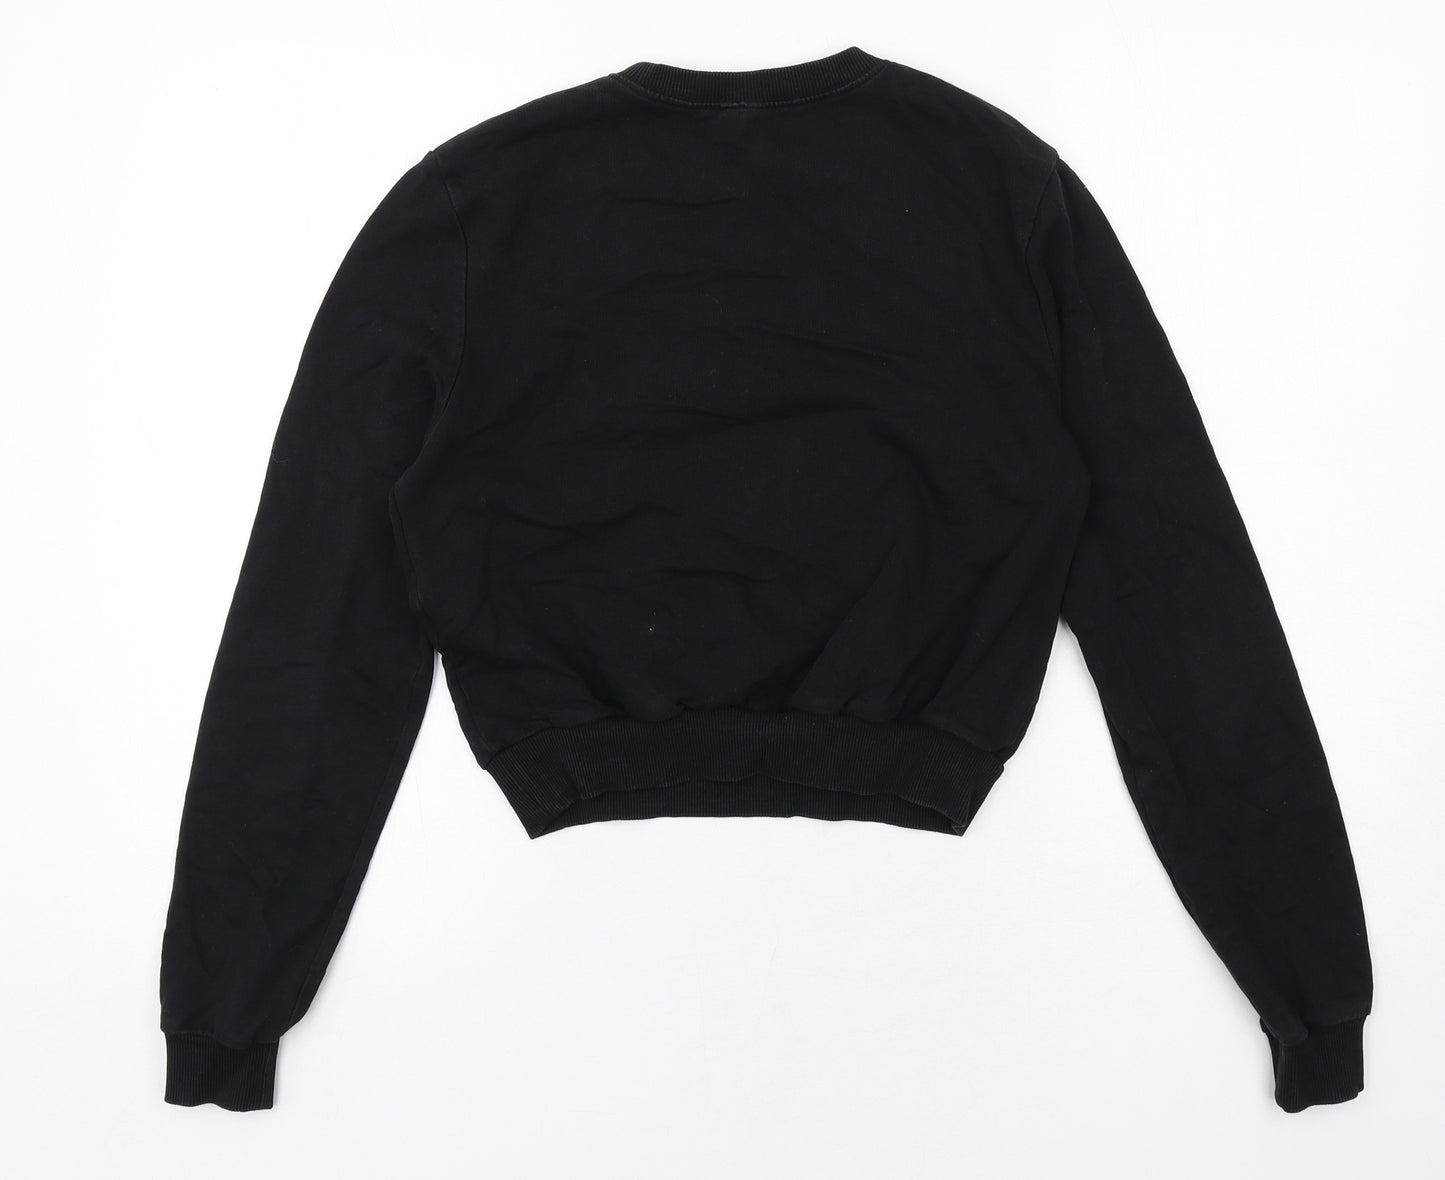 ASOS Womens Black Cotton Pullover Sweatshirt Size 8 Pullover